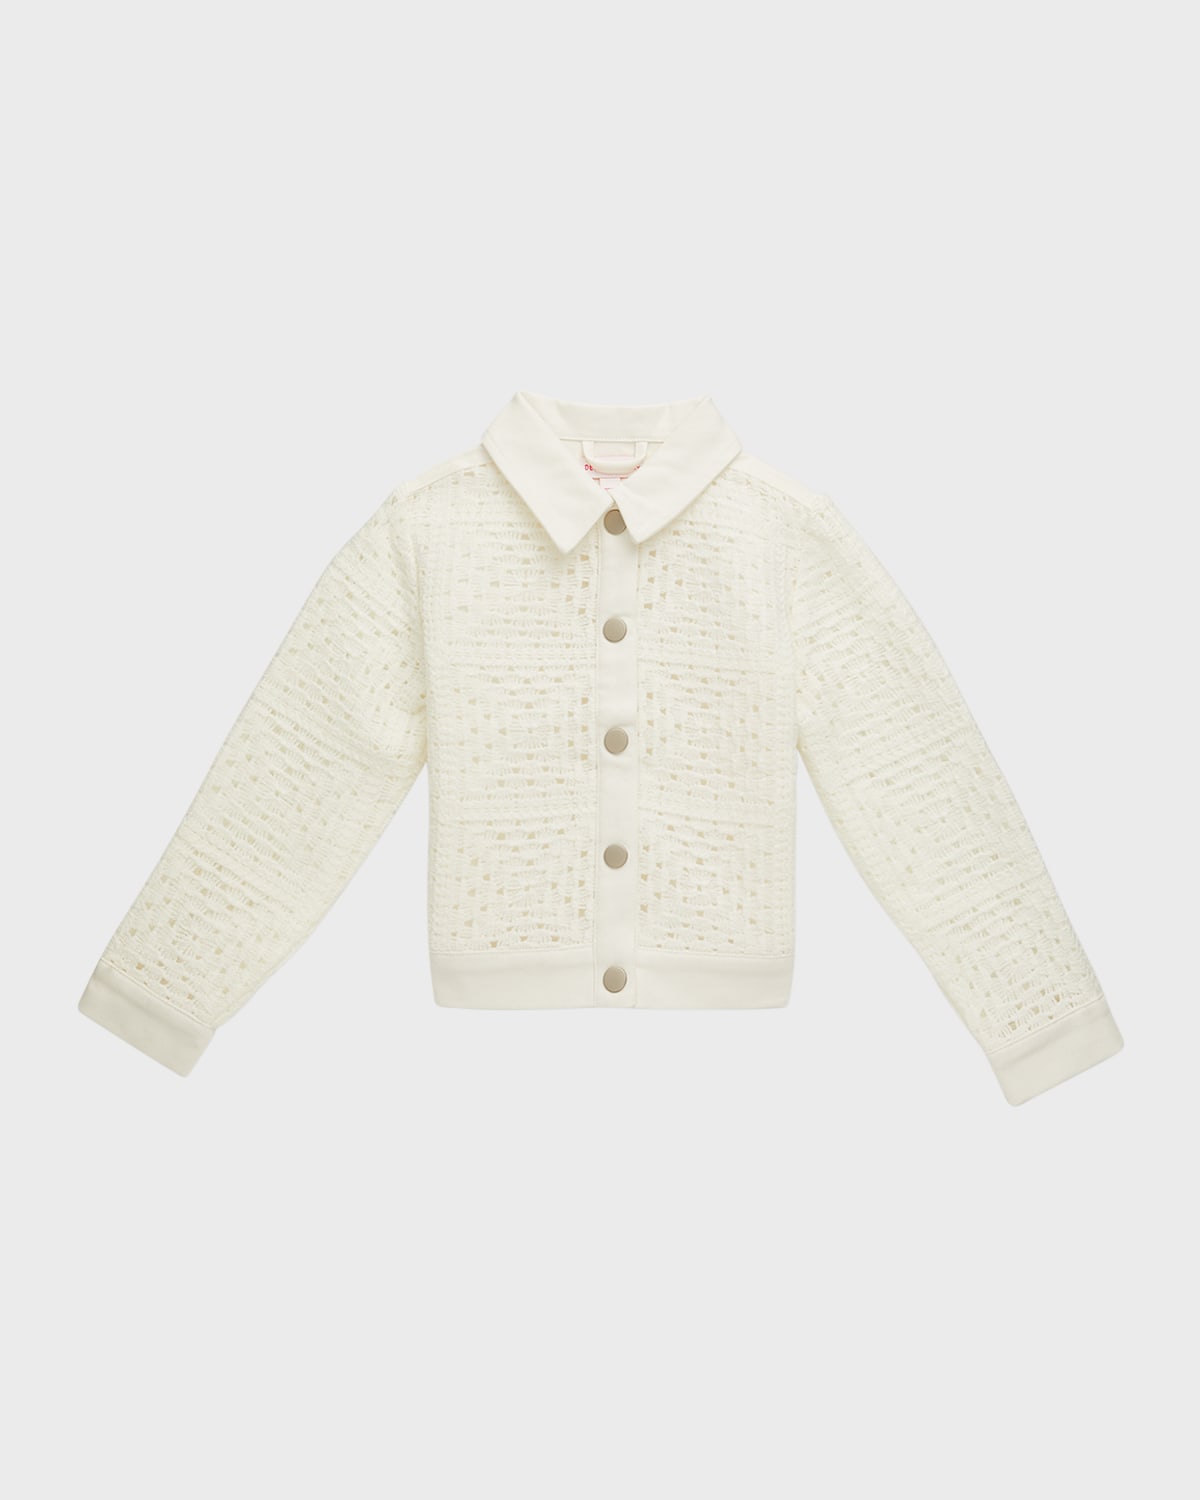 Girl's Crochet Denim Jacket, Size S-XL